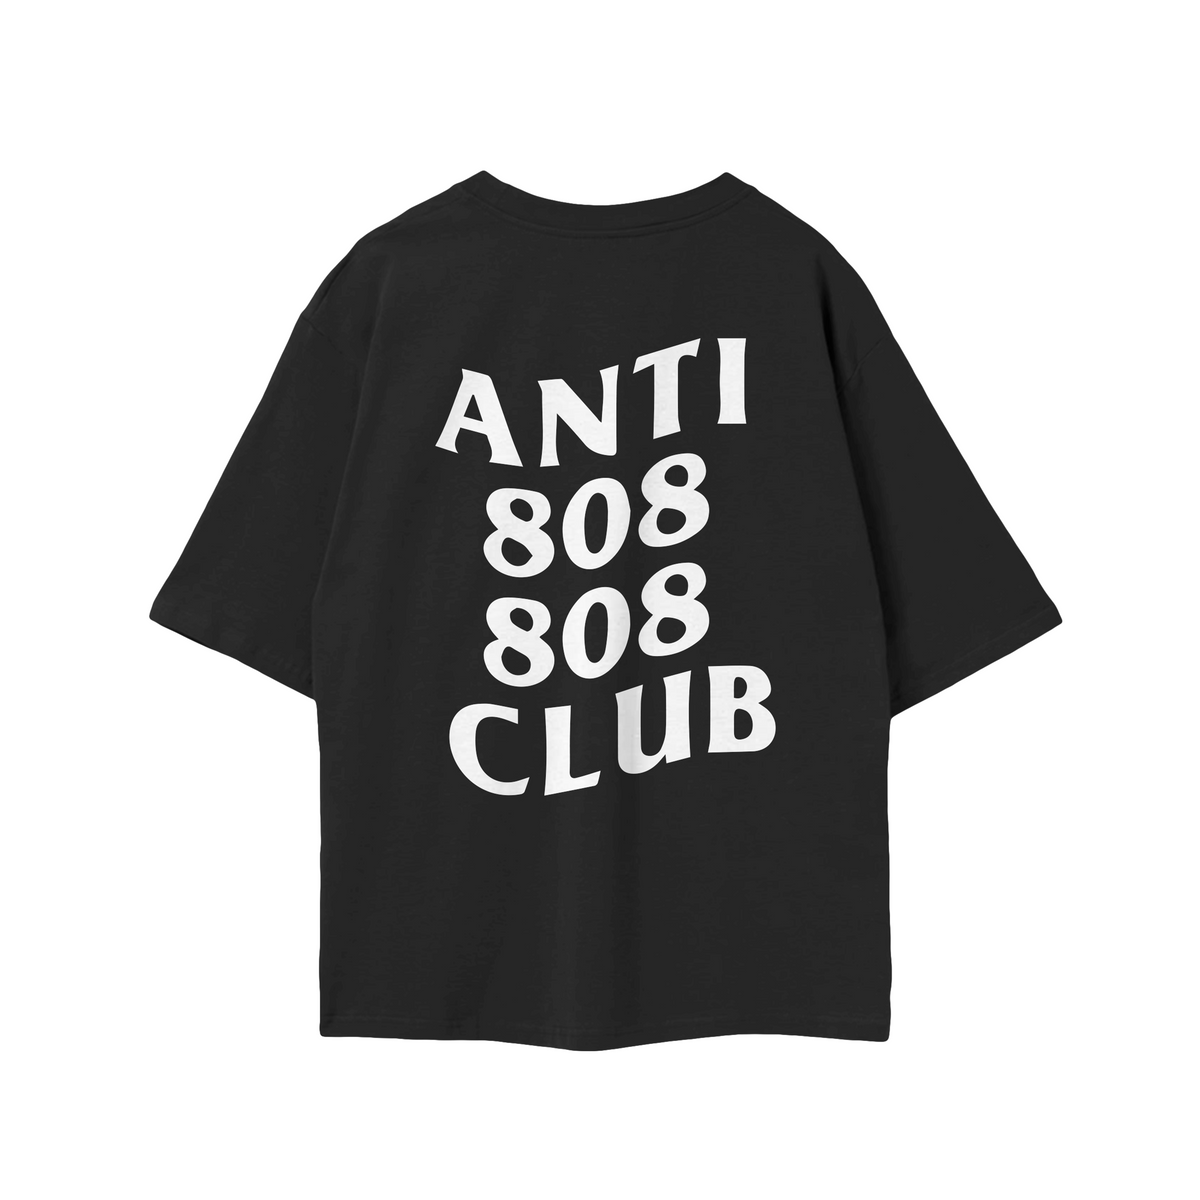 Anti 808 808 Club Capsule T-Shirt (OPEN PRE-ORDER)